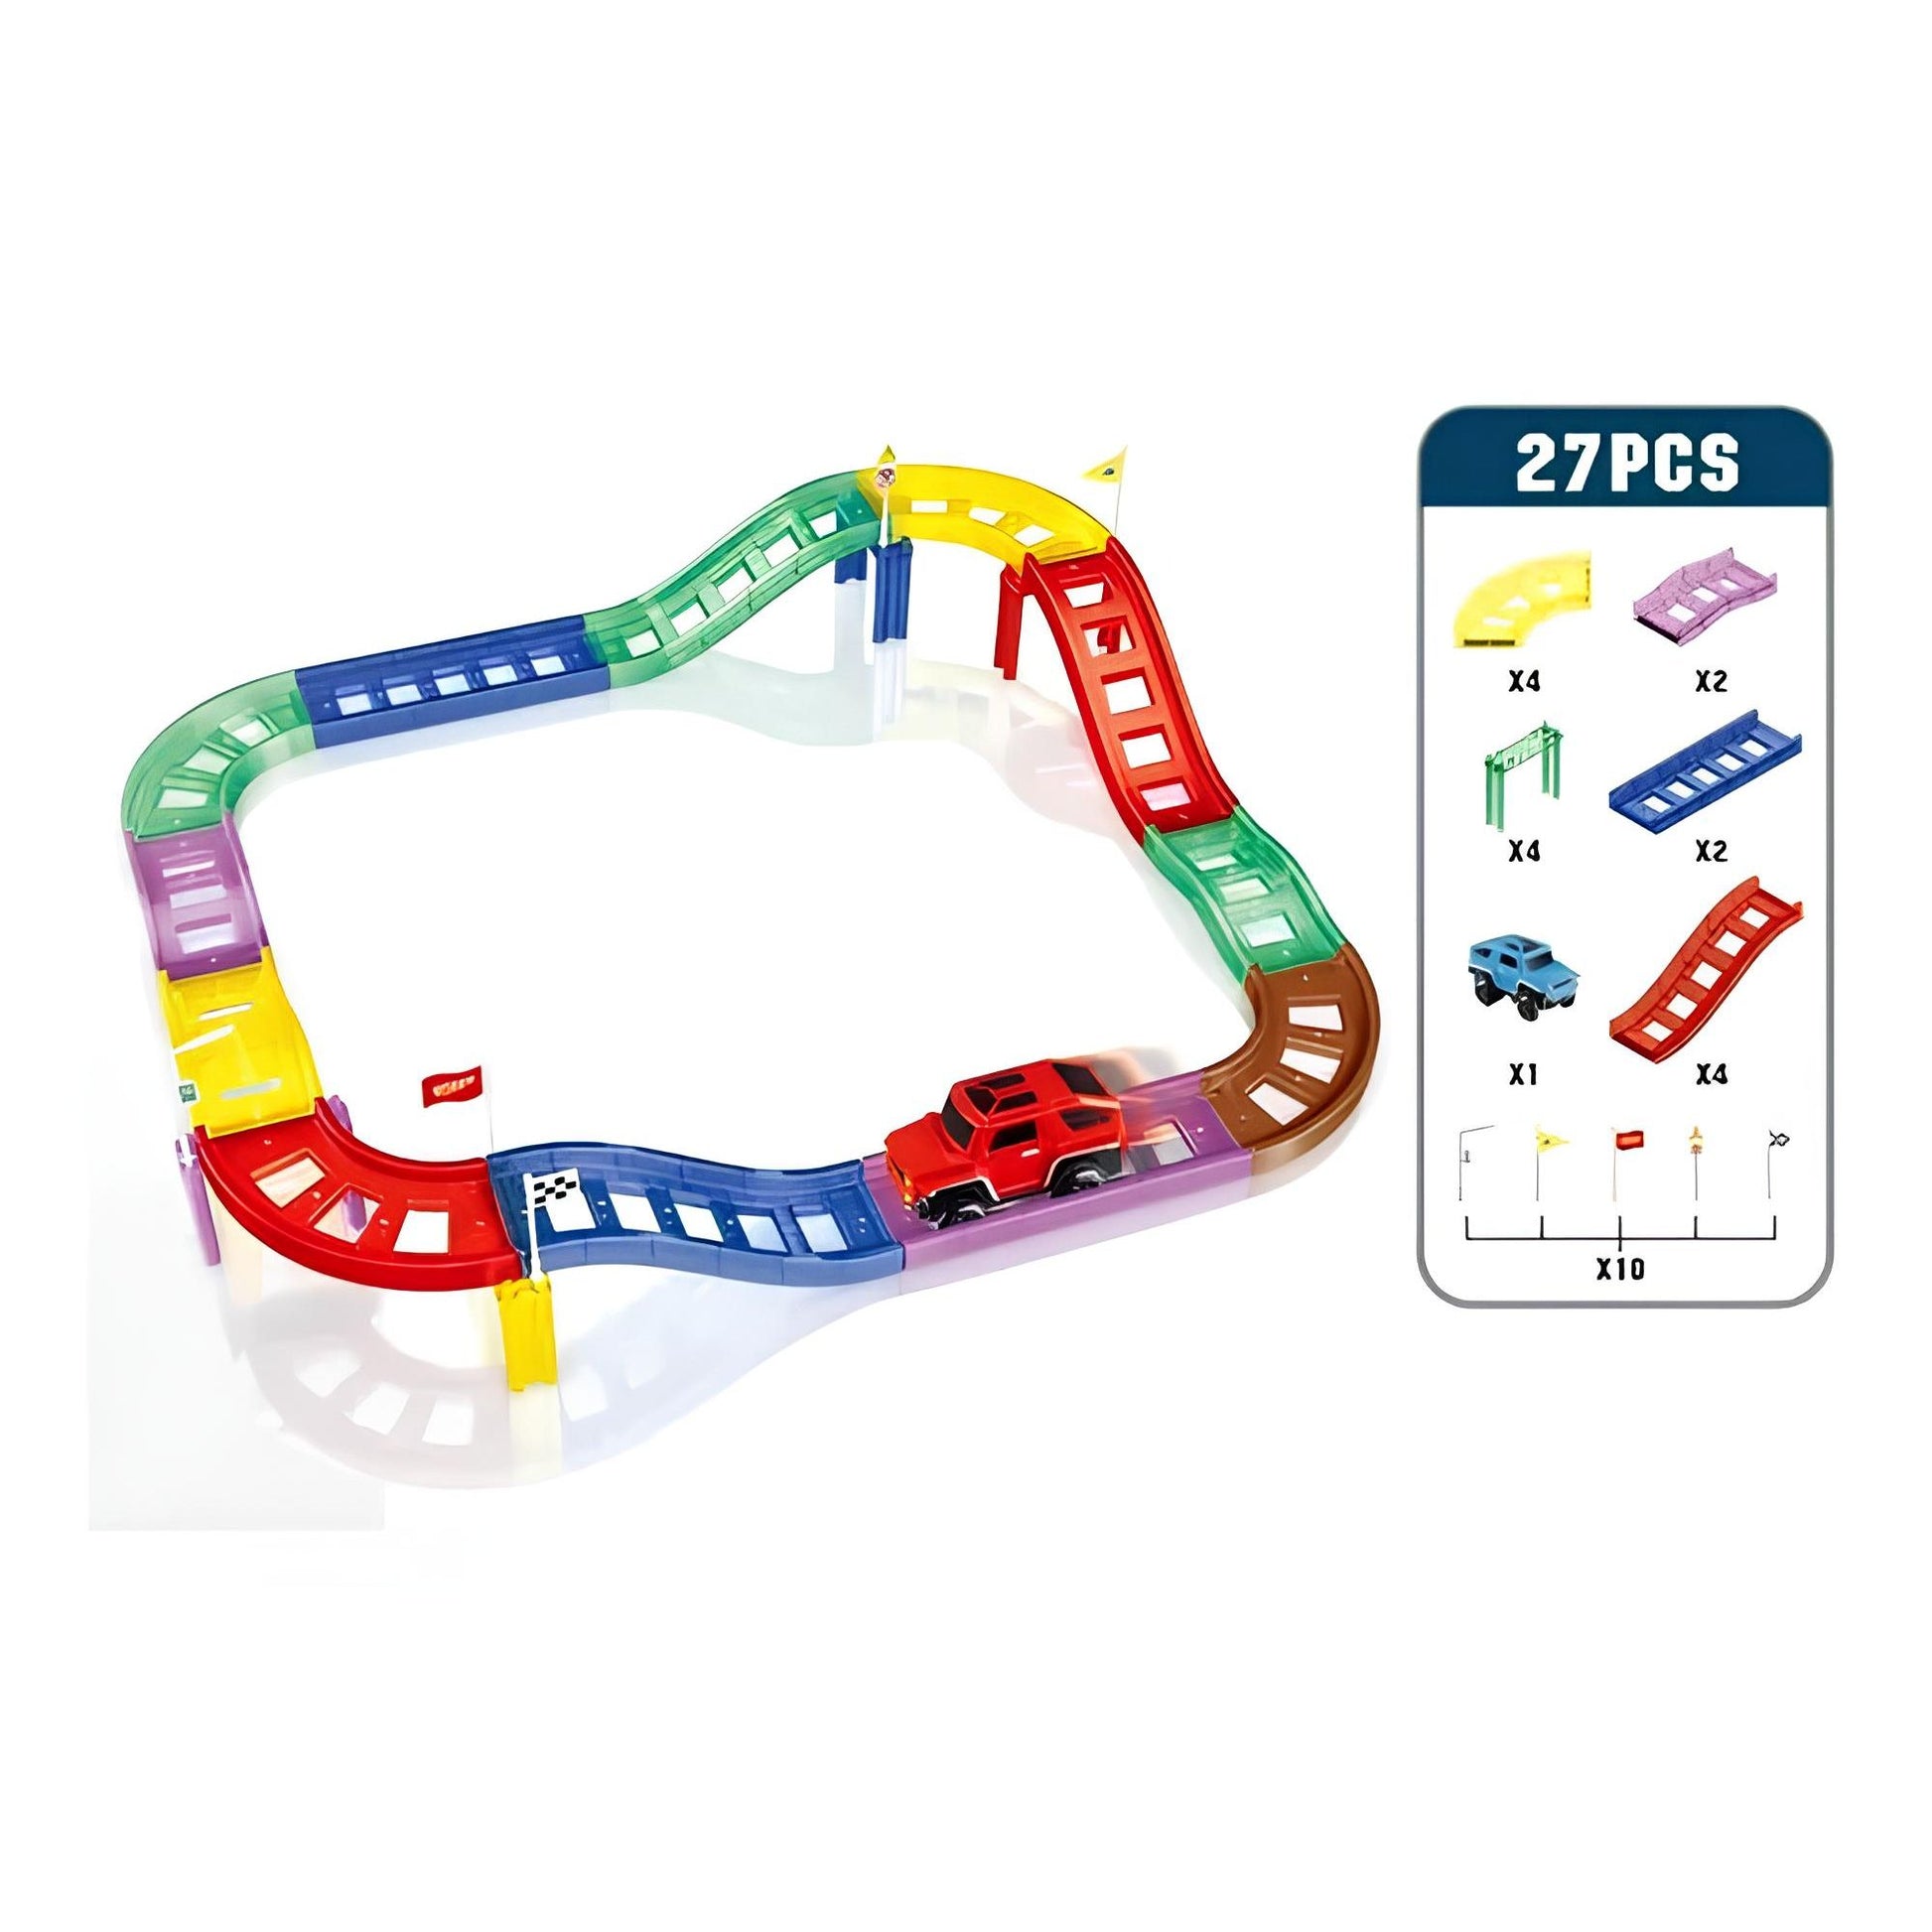 Magnet Tracks Car | Roller Coaster Cars | 27 & 47 Pcs